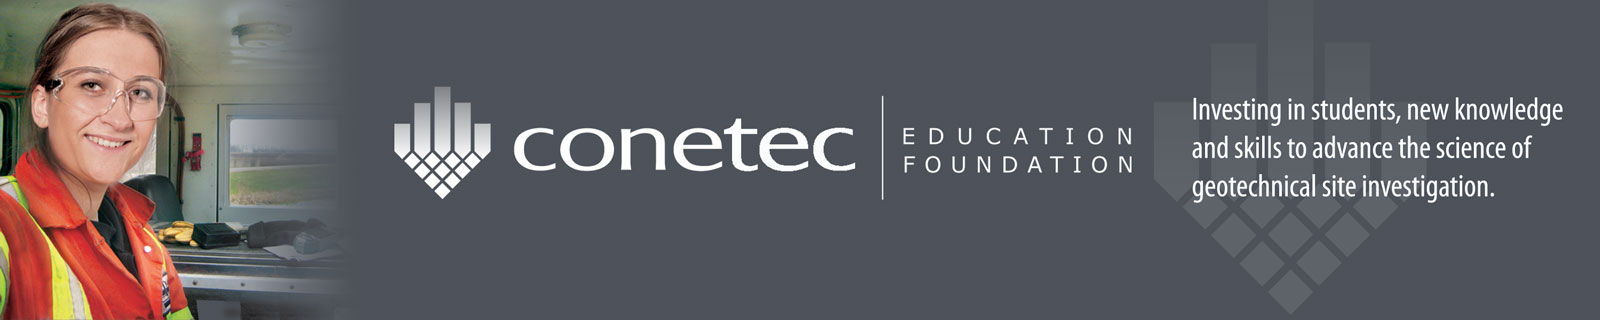 ConeTec Education Foundation